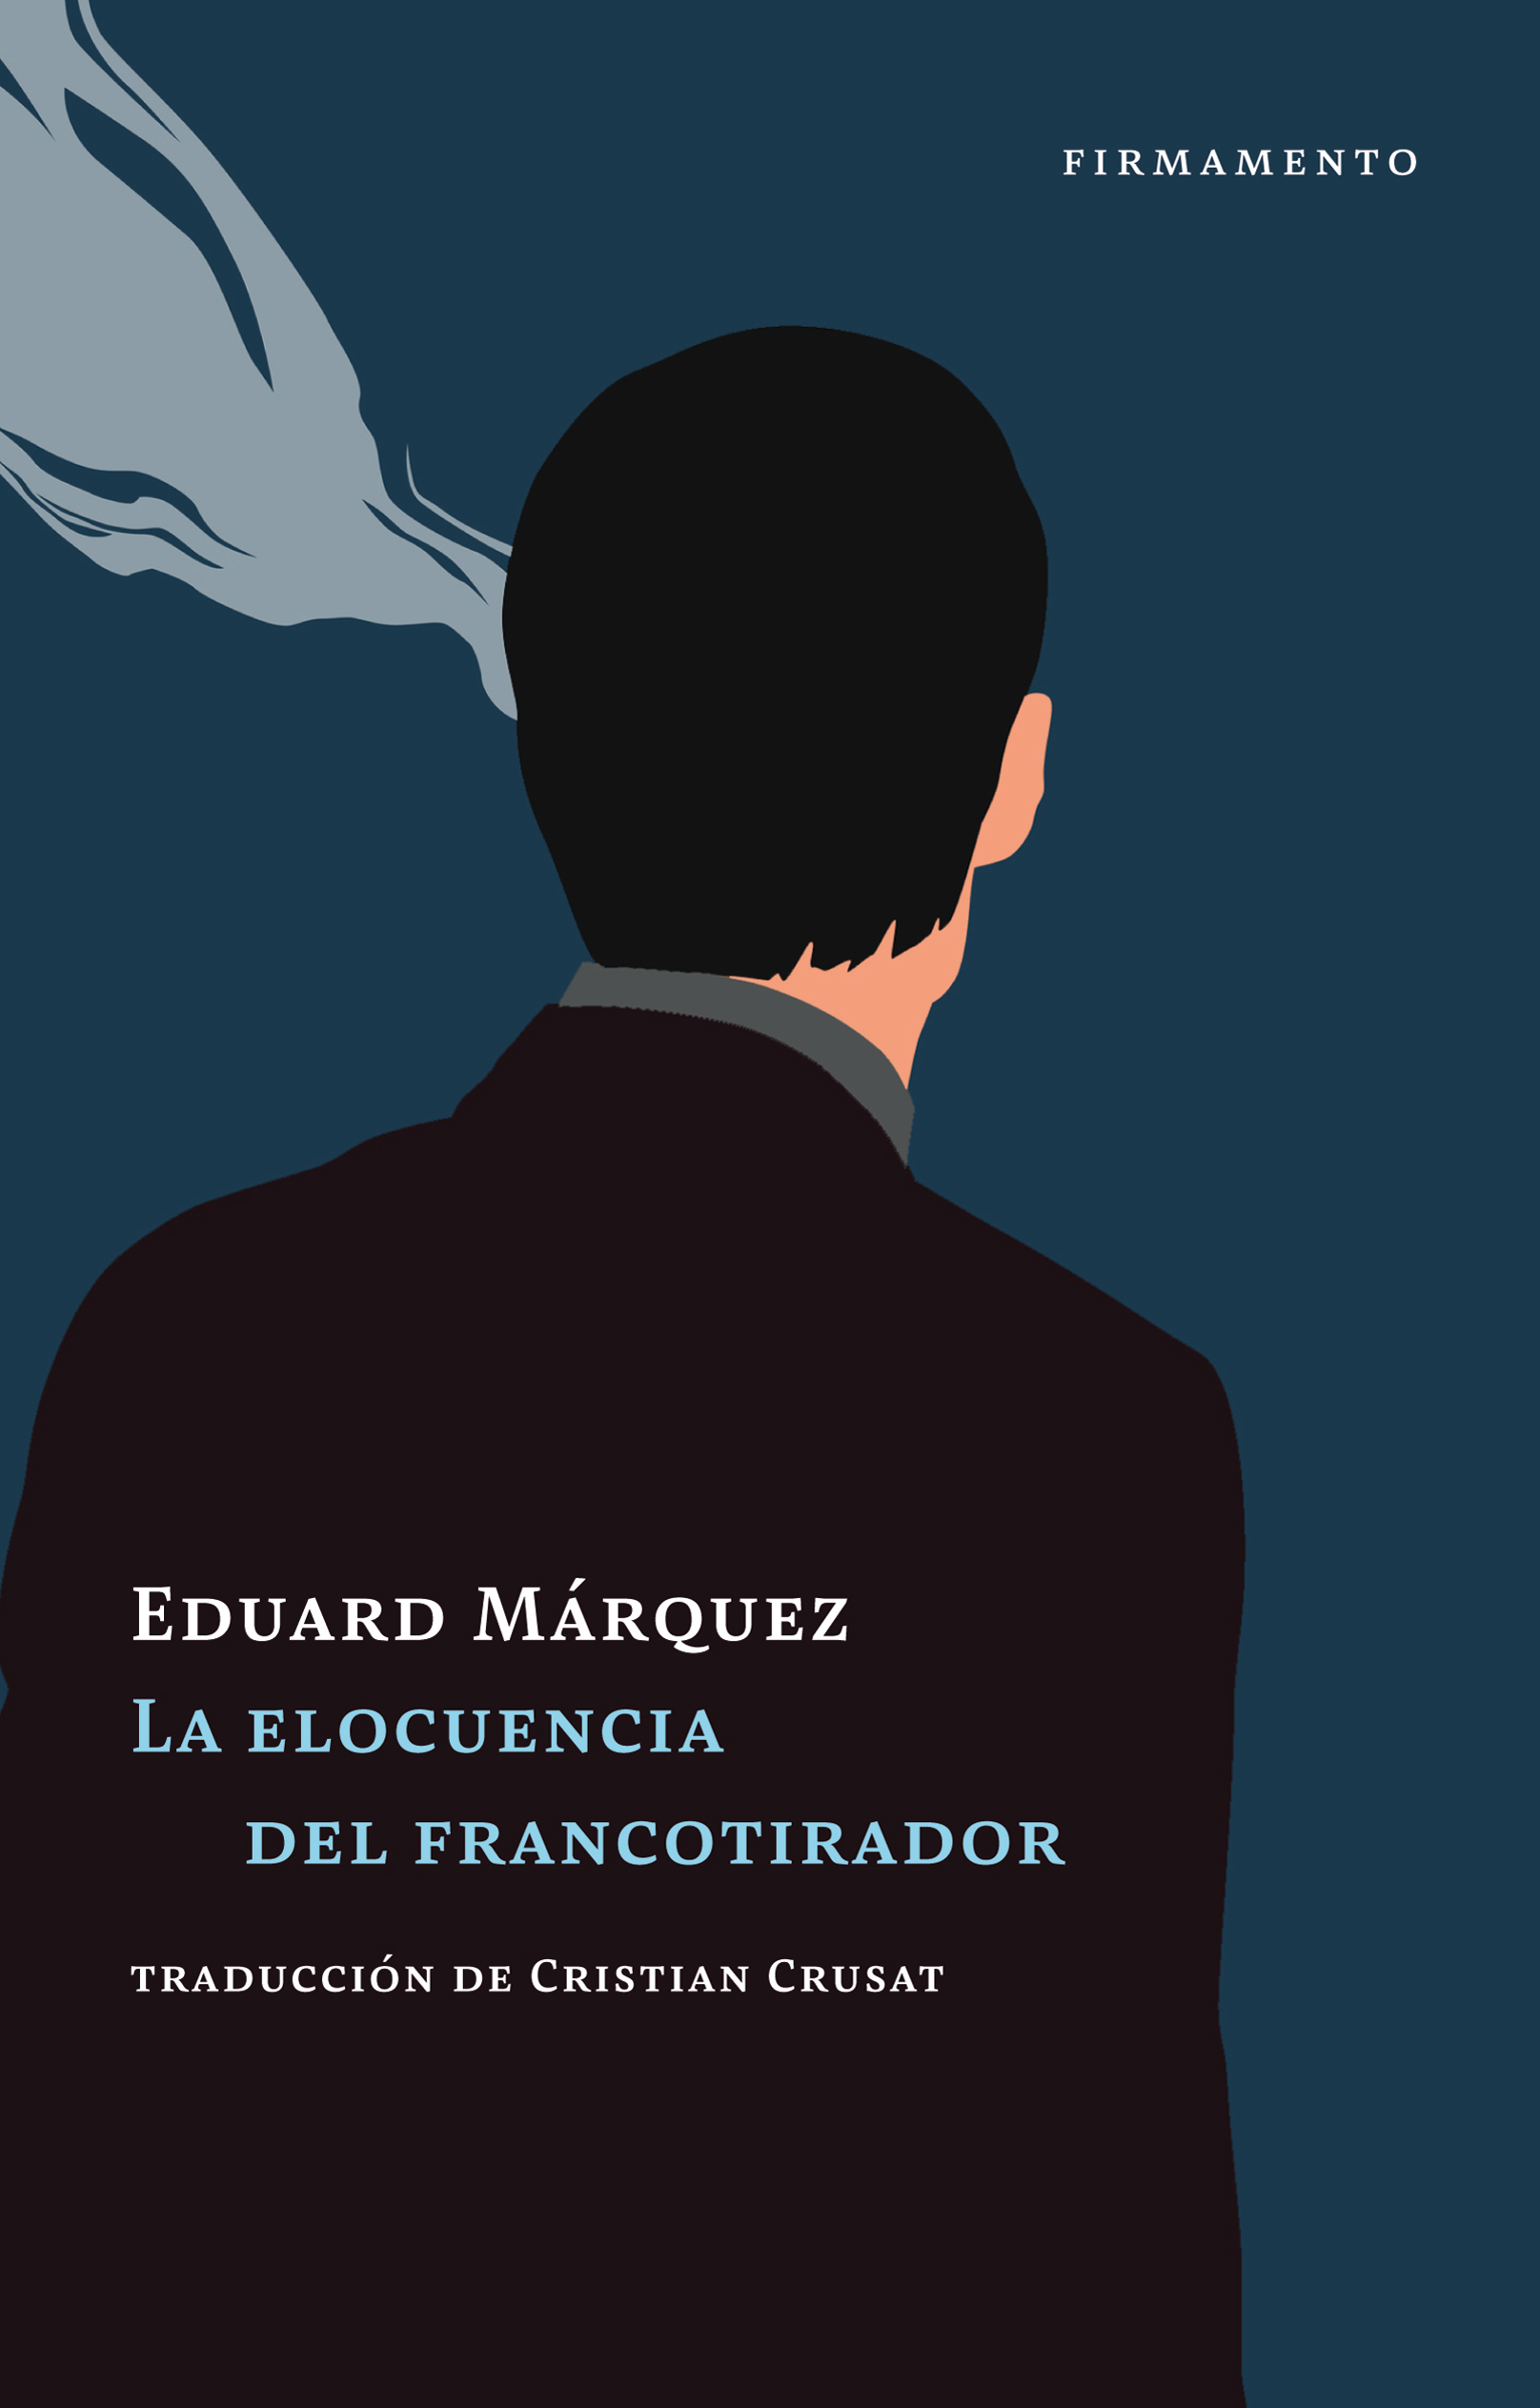 La elocuencia del francotirador, de Eduard Márquez